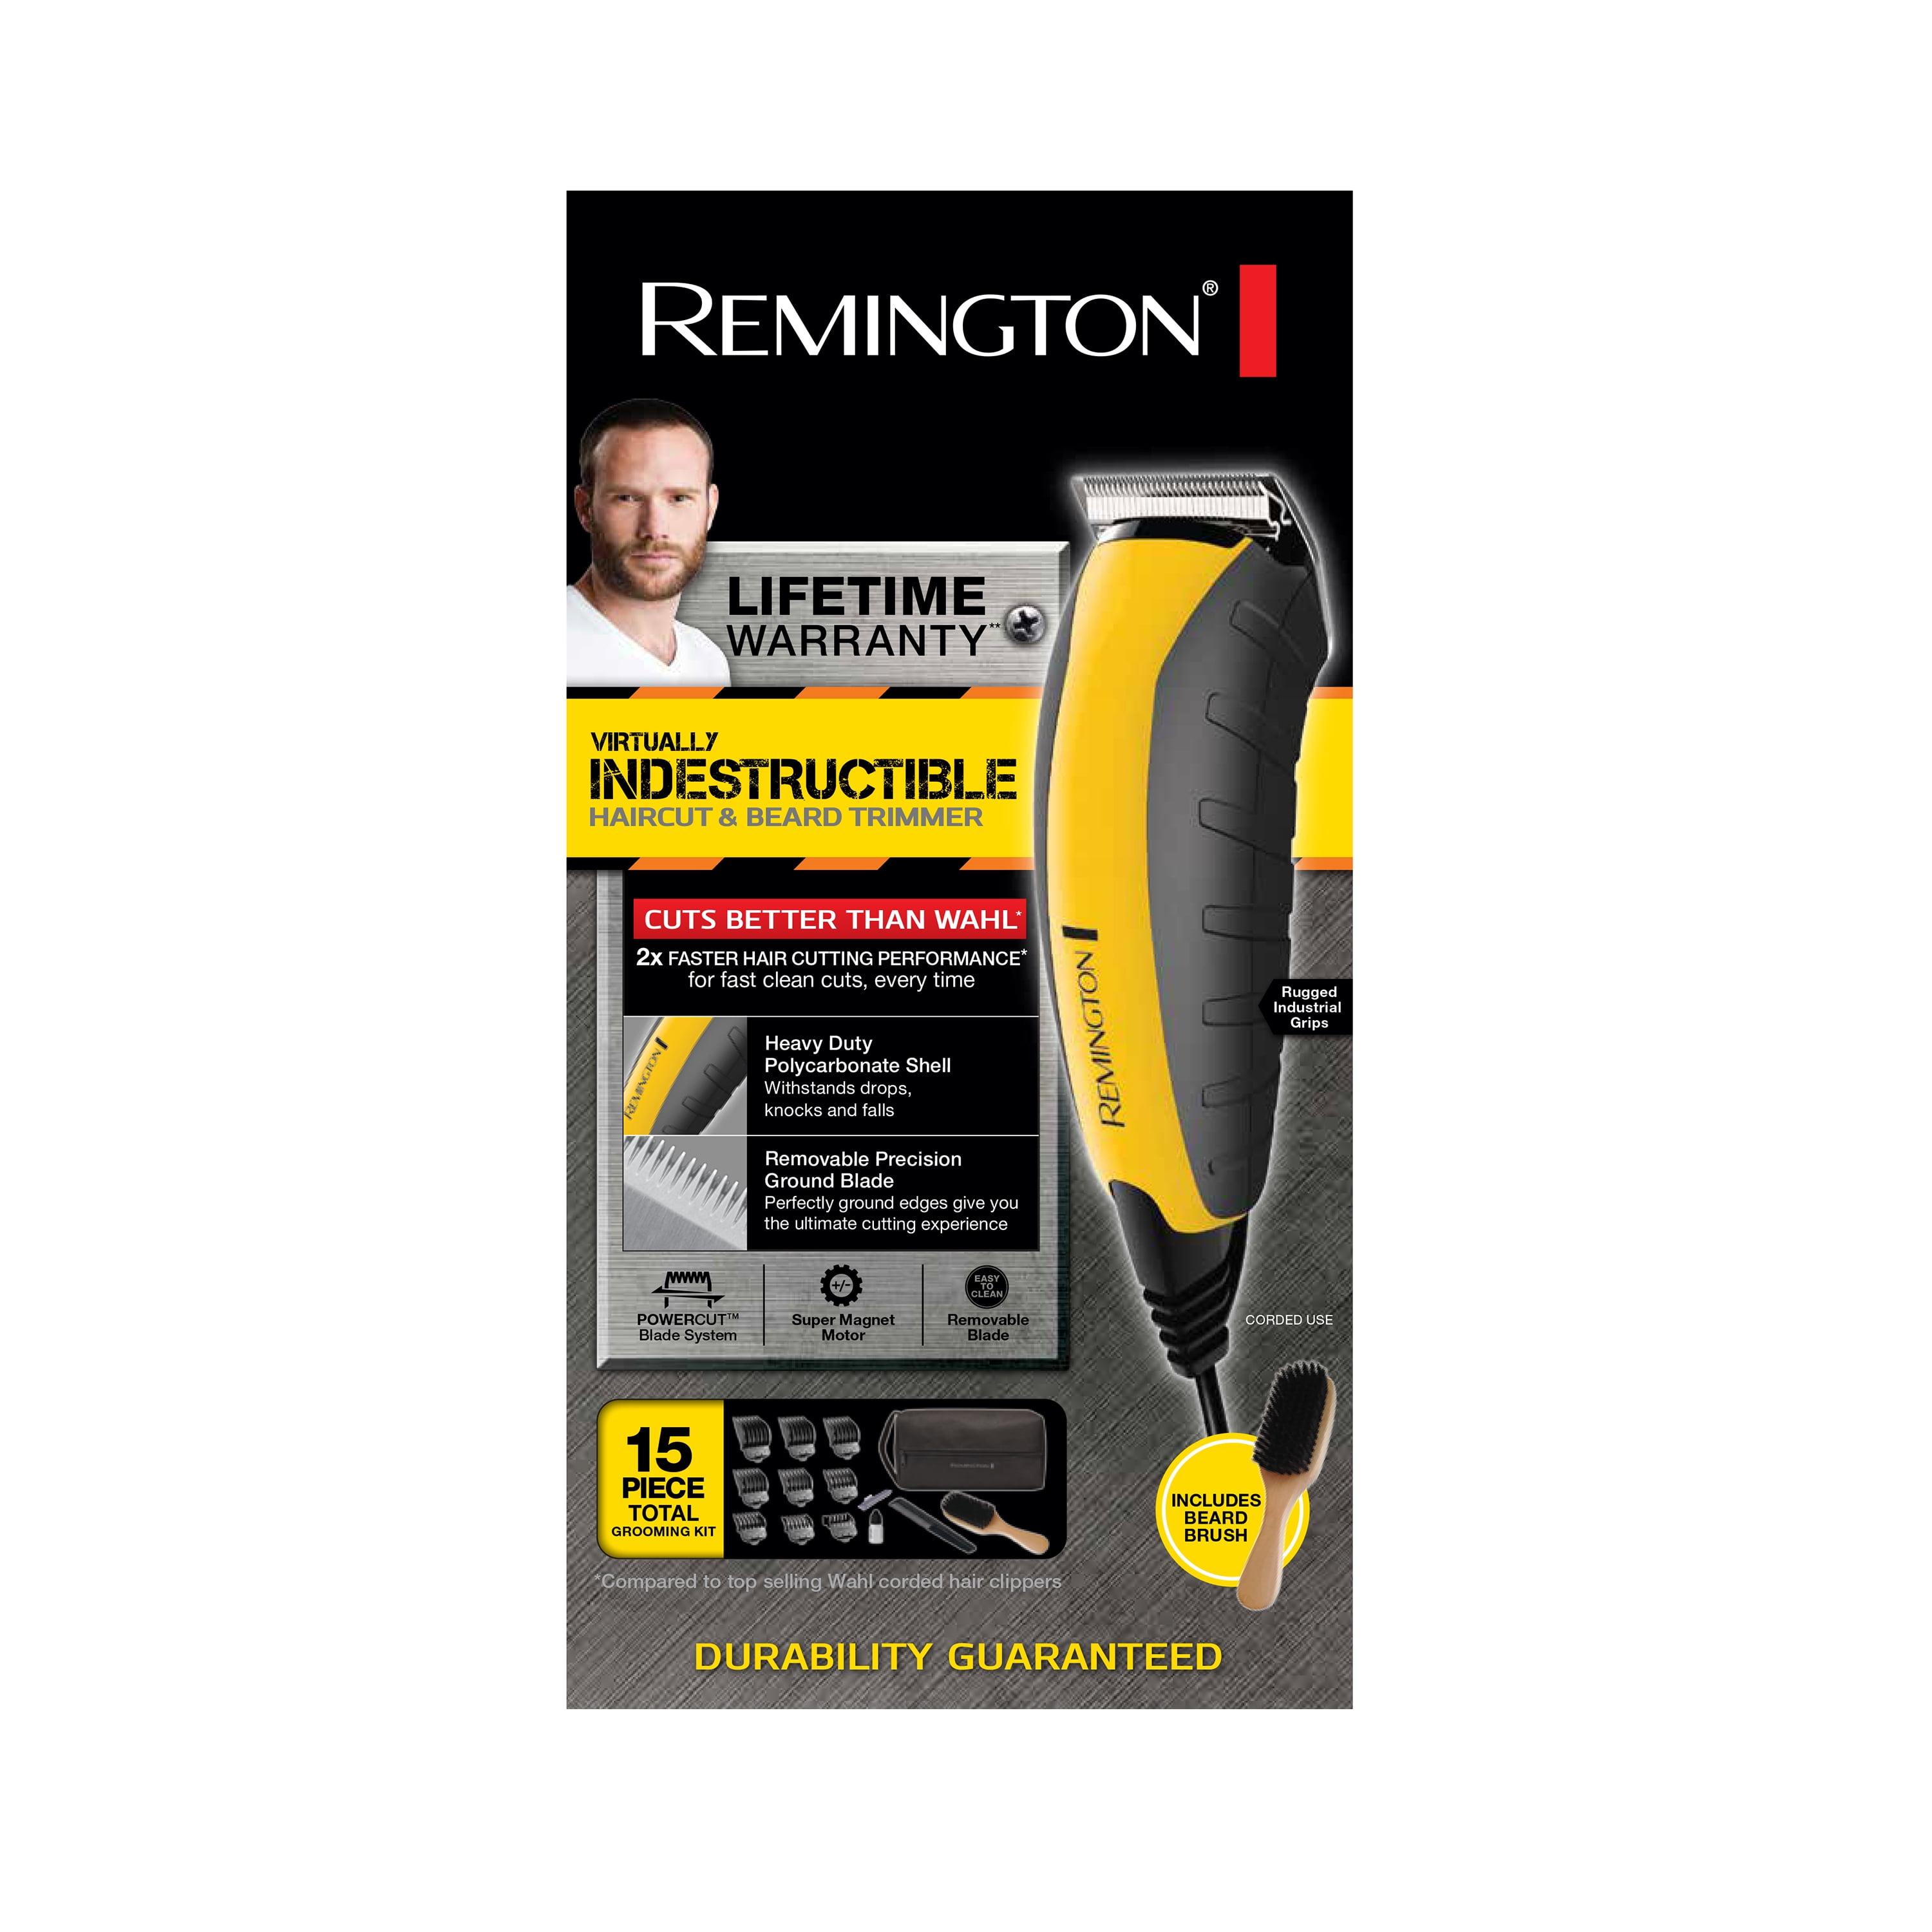 remington virtually indestructible hair clippers